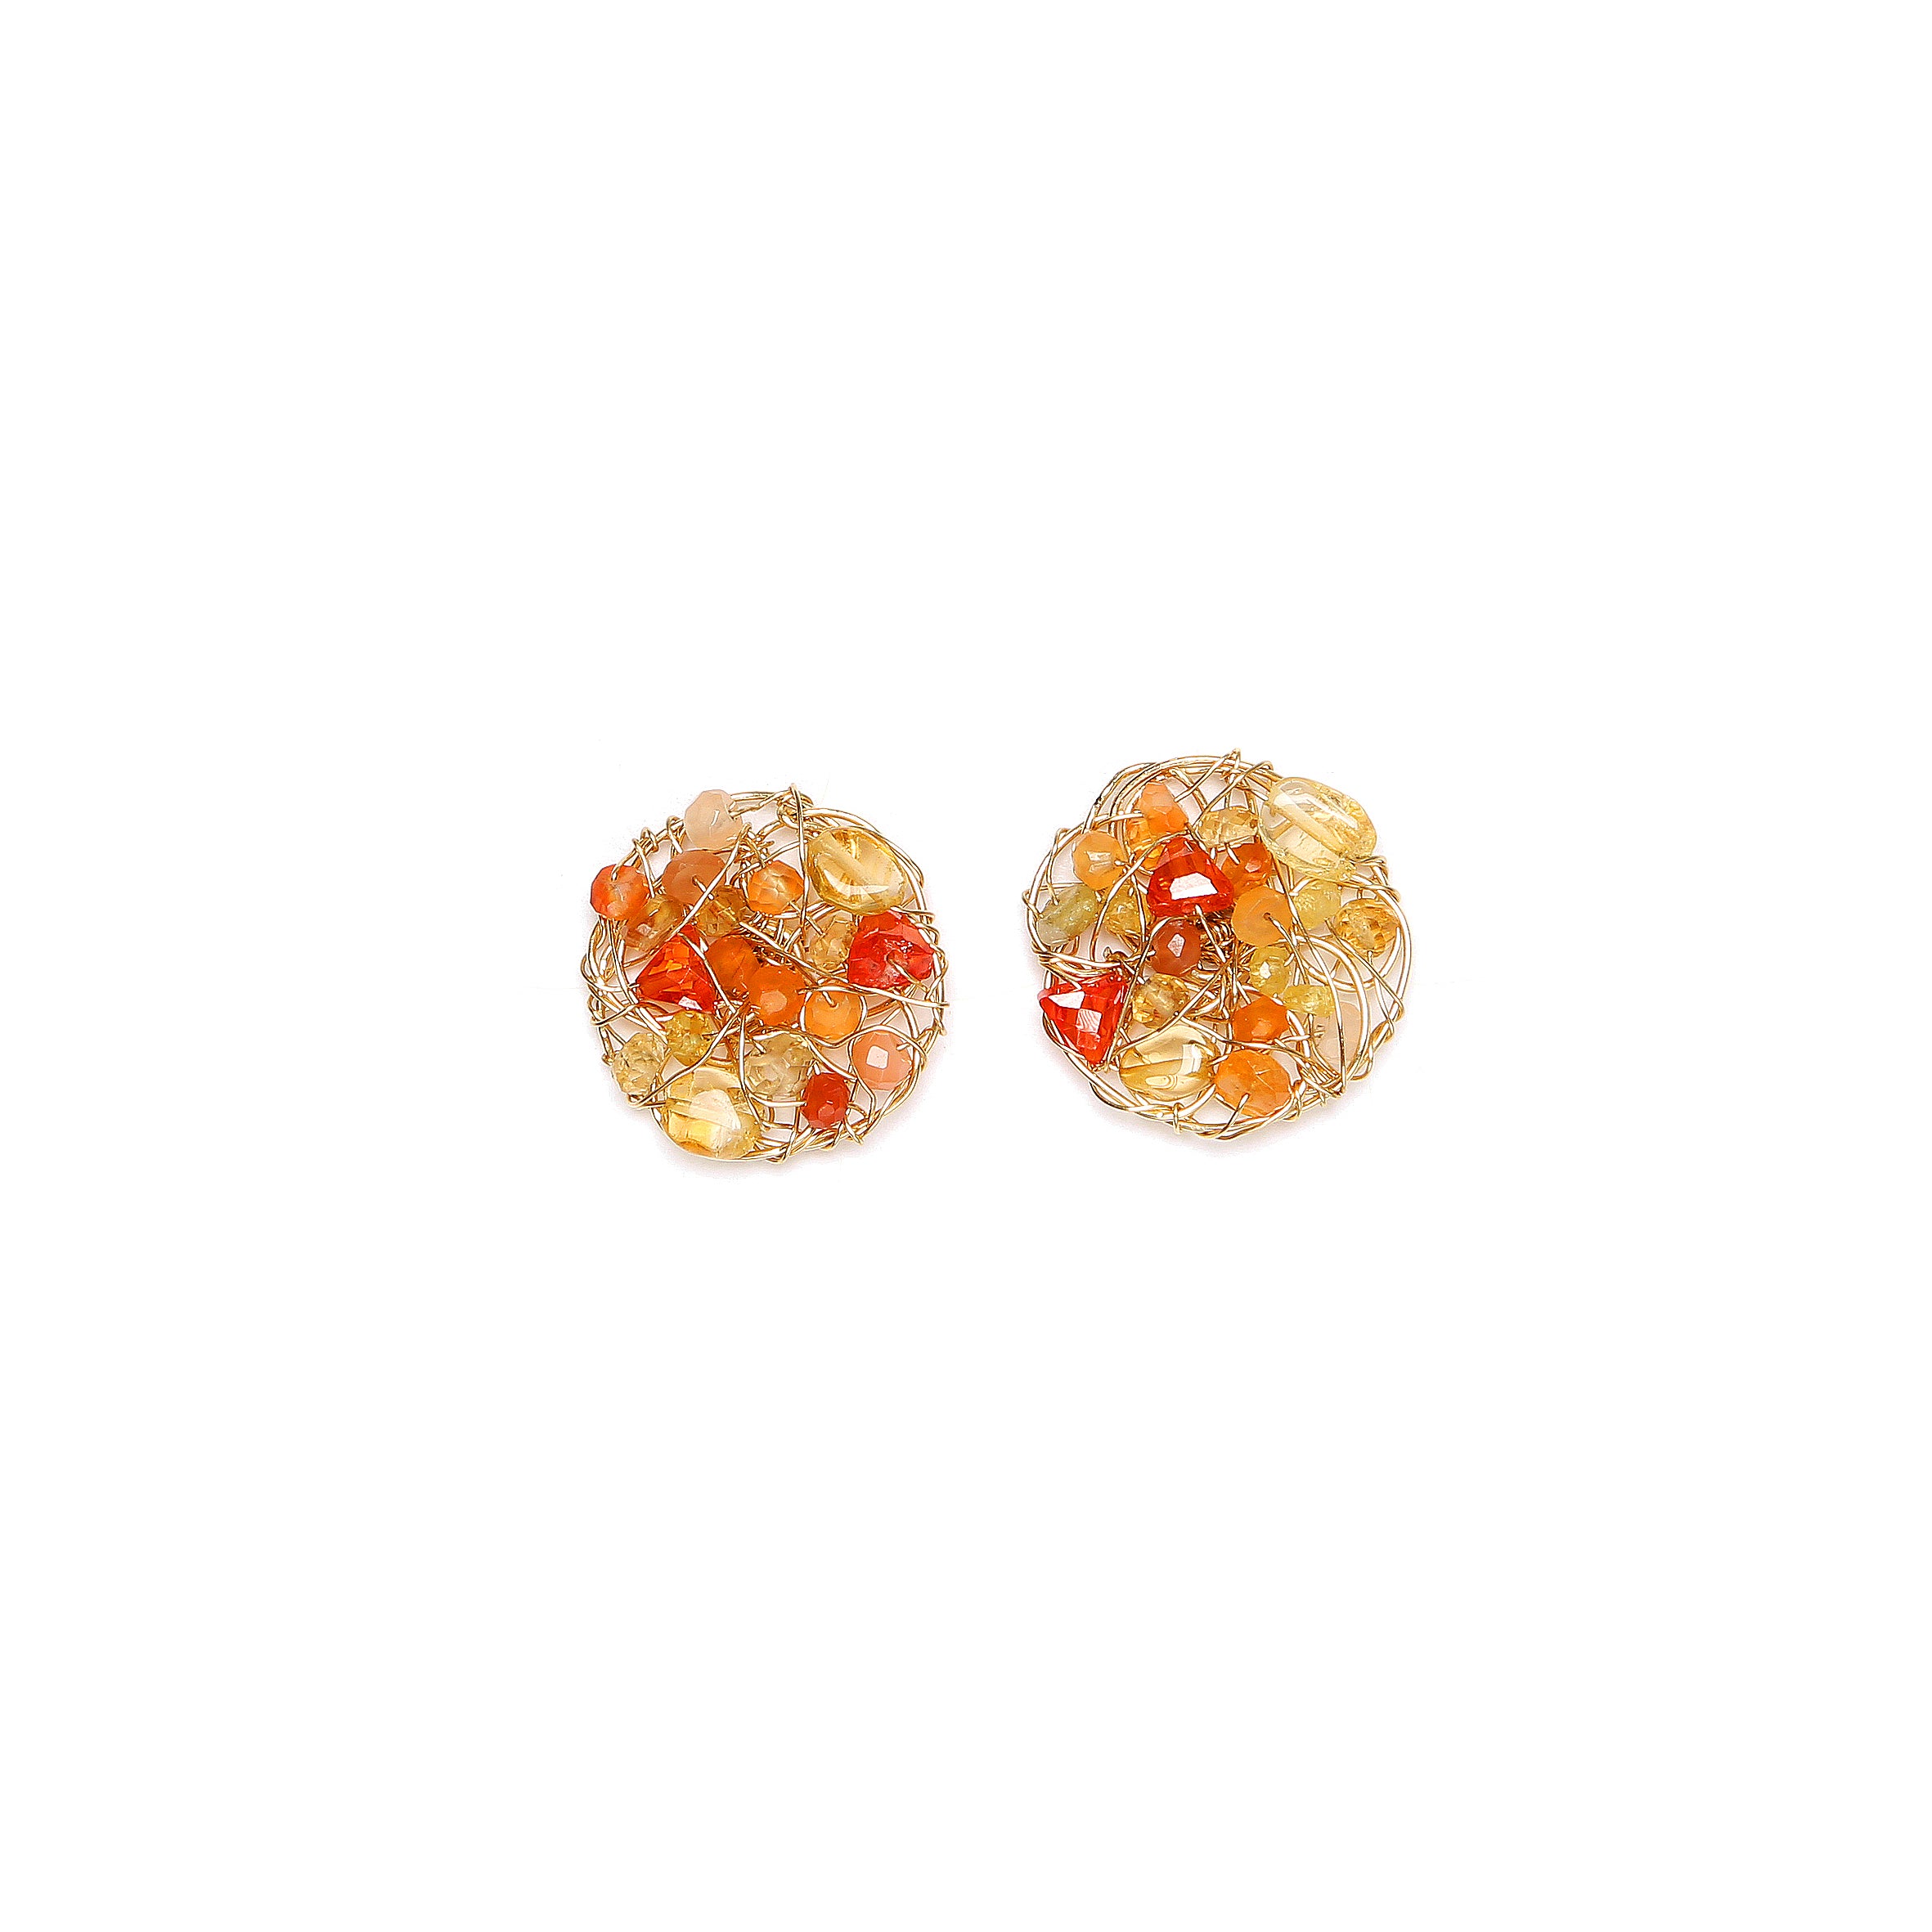 Aura Stud Earrings #1 (20mm) - Orange Mix Gems Earrings TARBAY   